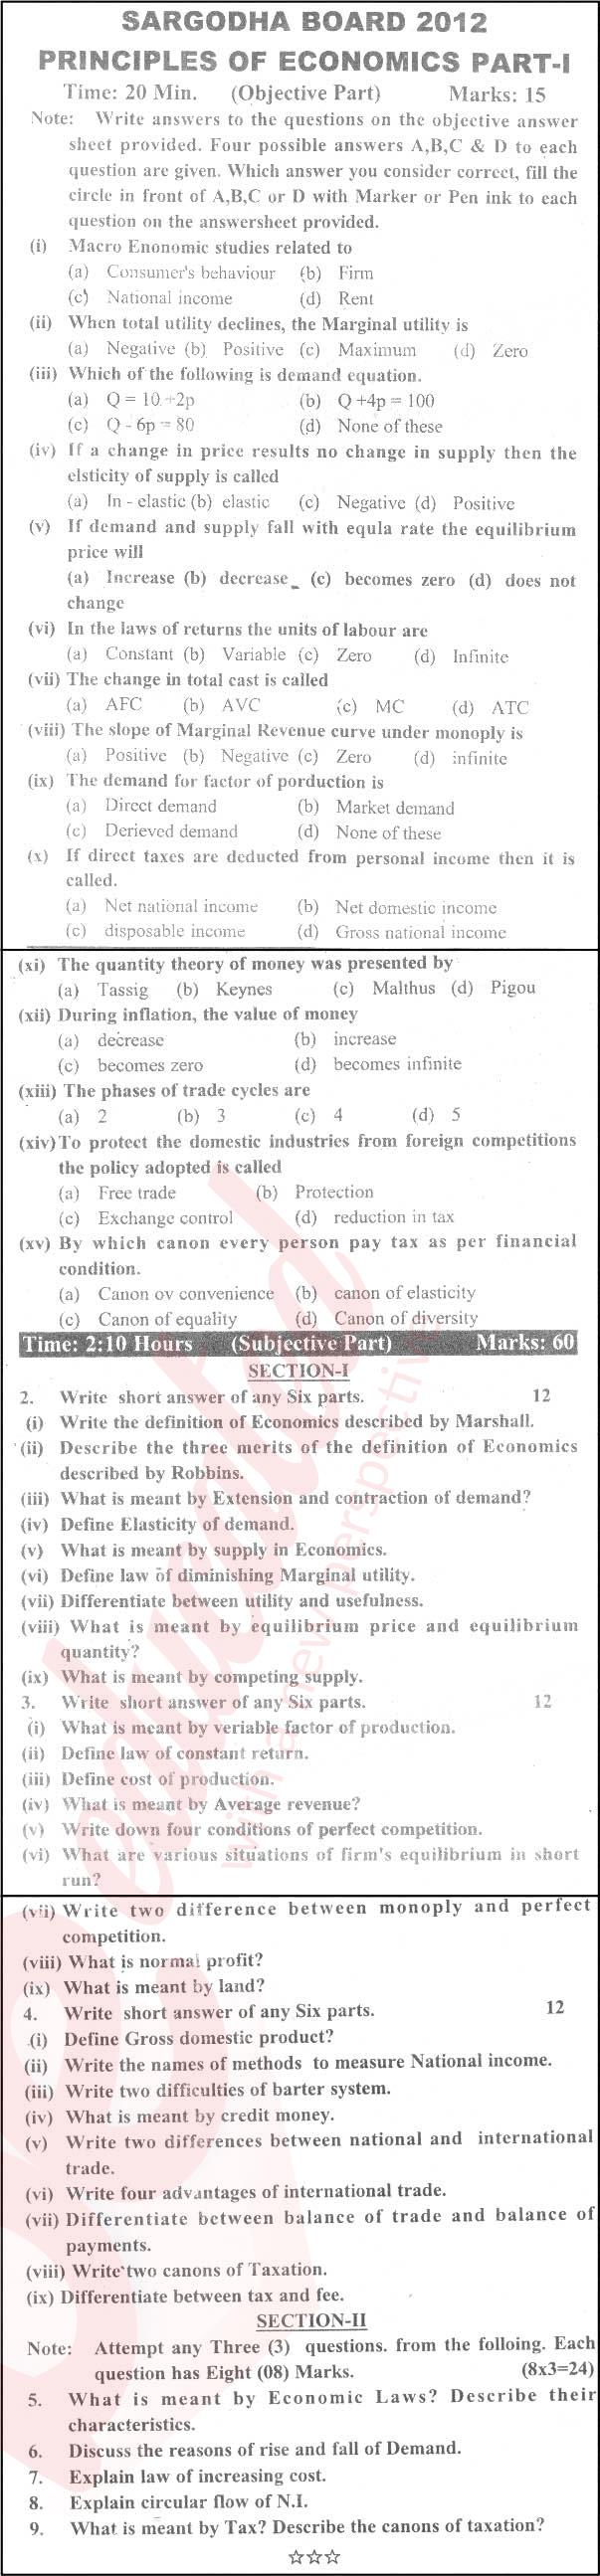 Principles of Economics ICOM Part 1 Past Paper Group 1 BISE Sargodha 2012